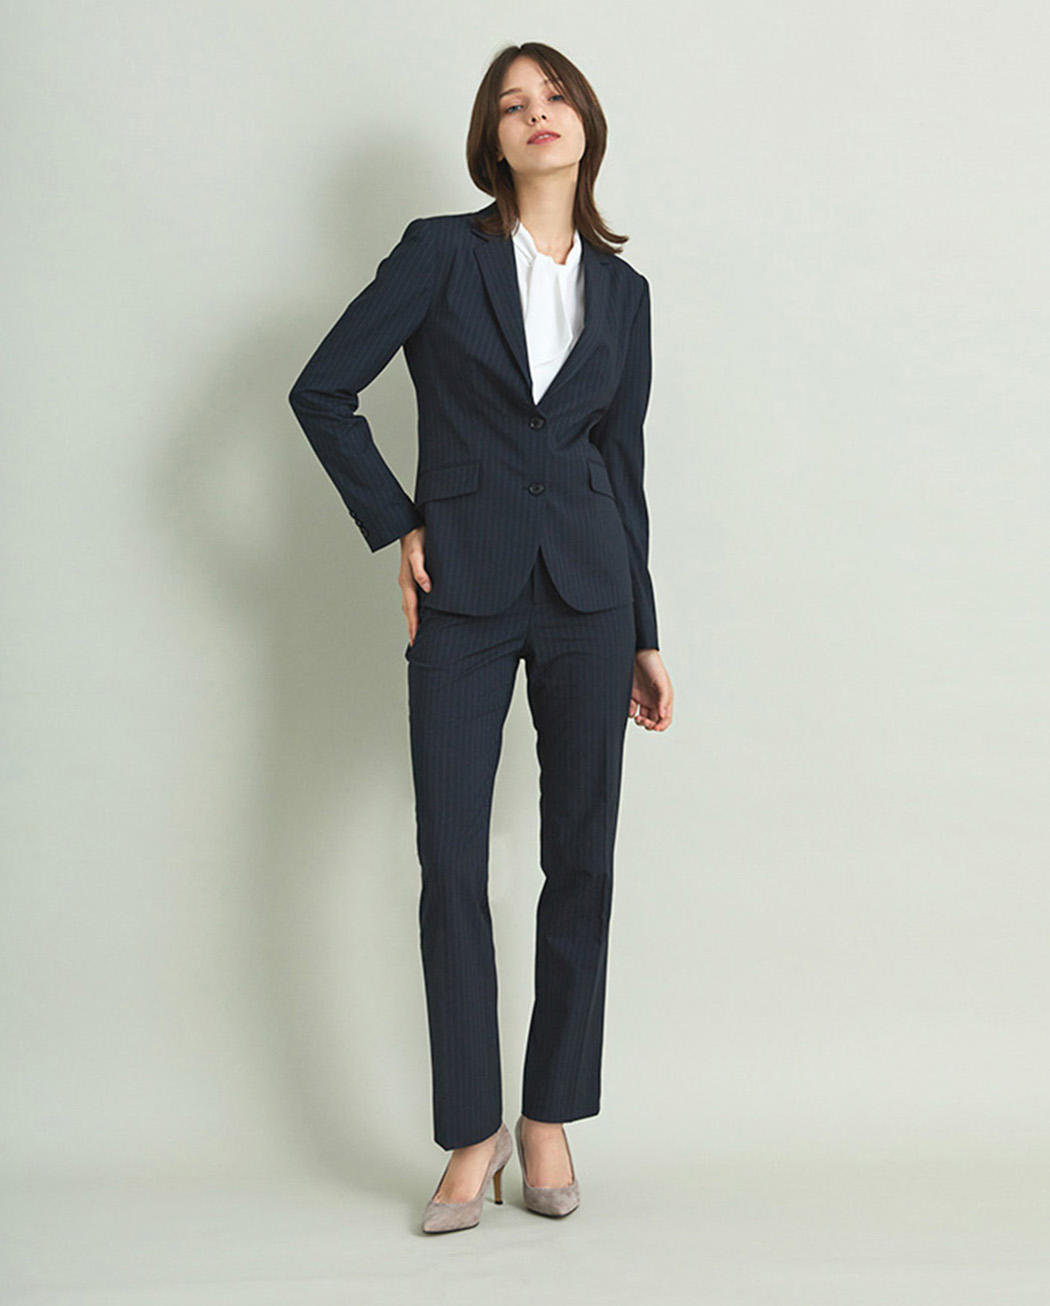 KASHIYAMA WOMENS スーツスタイル - PICK UP ITEMS | オーダースーツの 